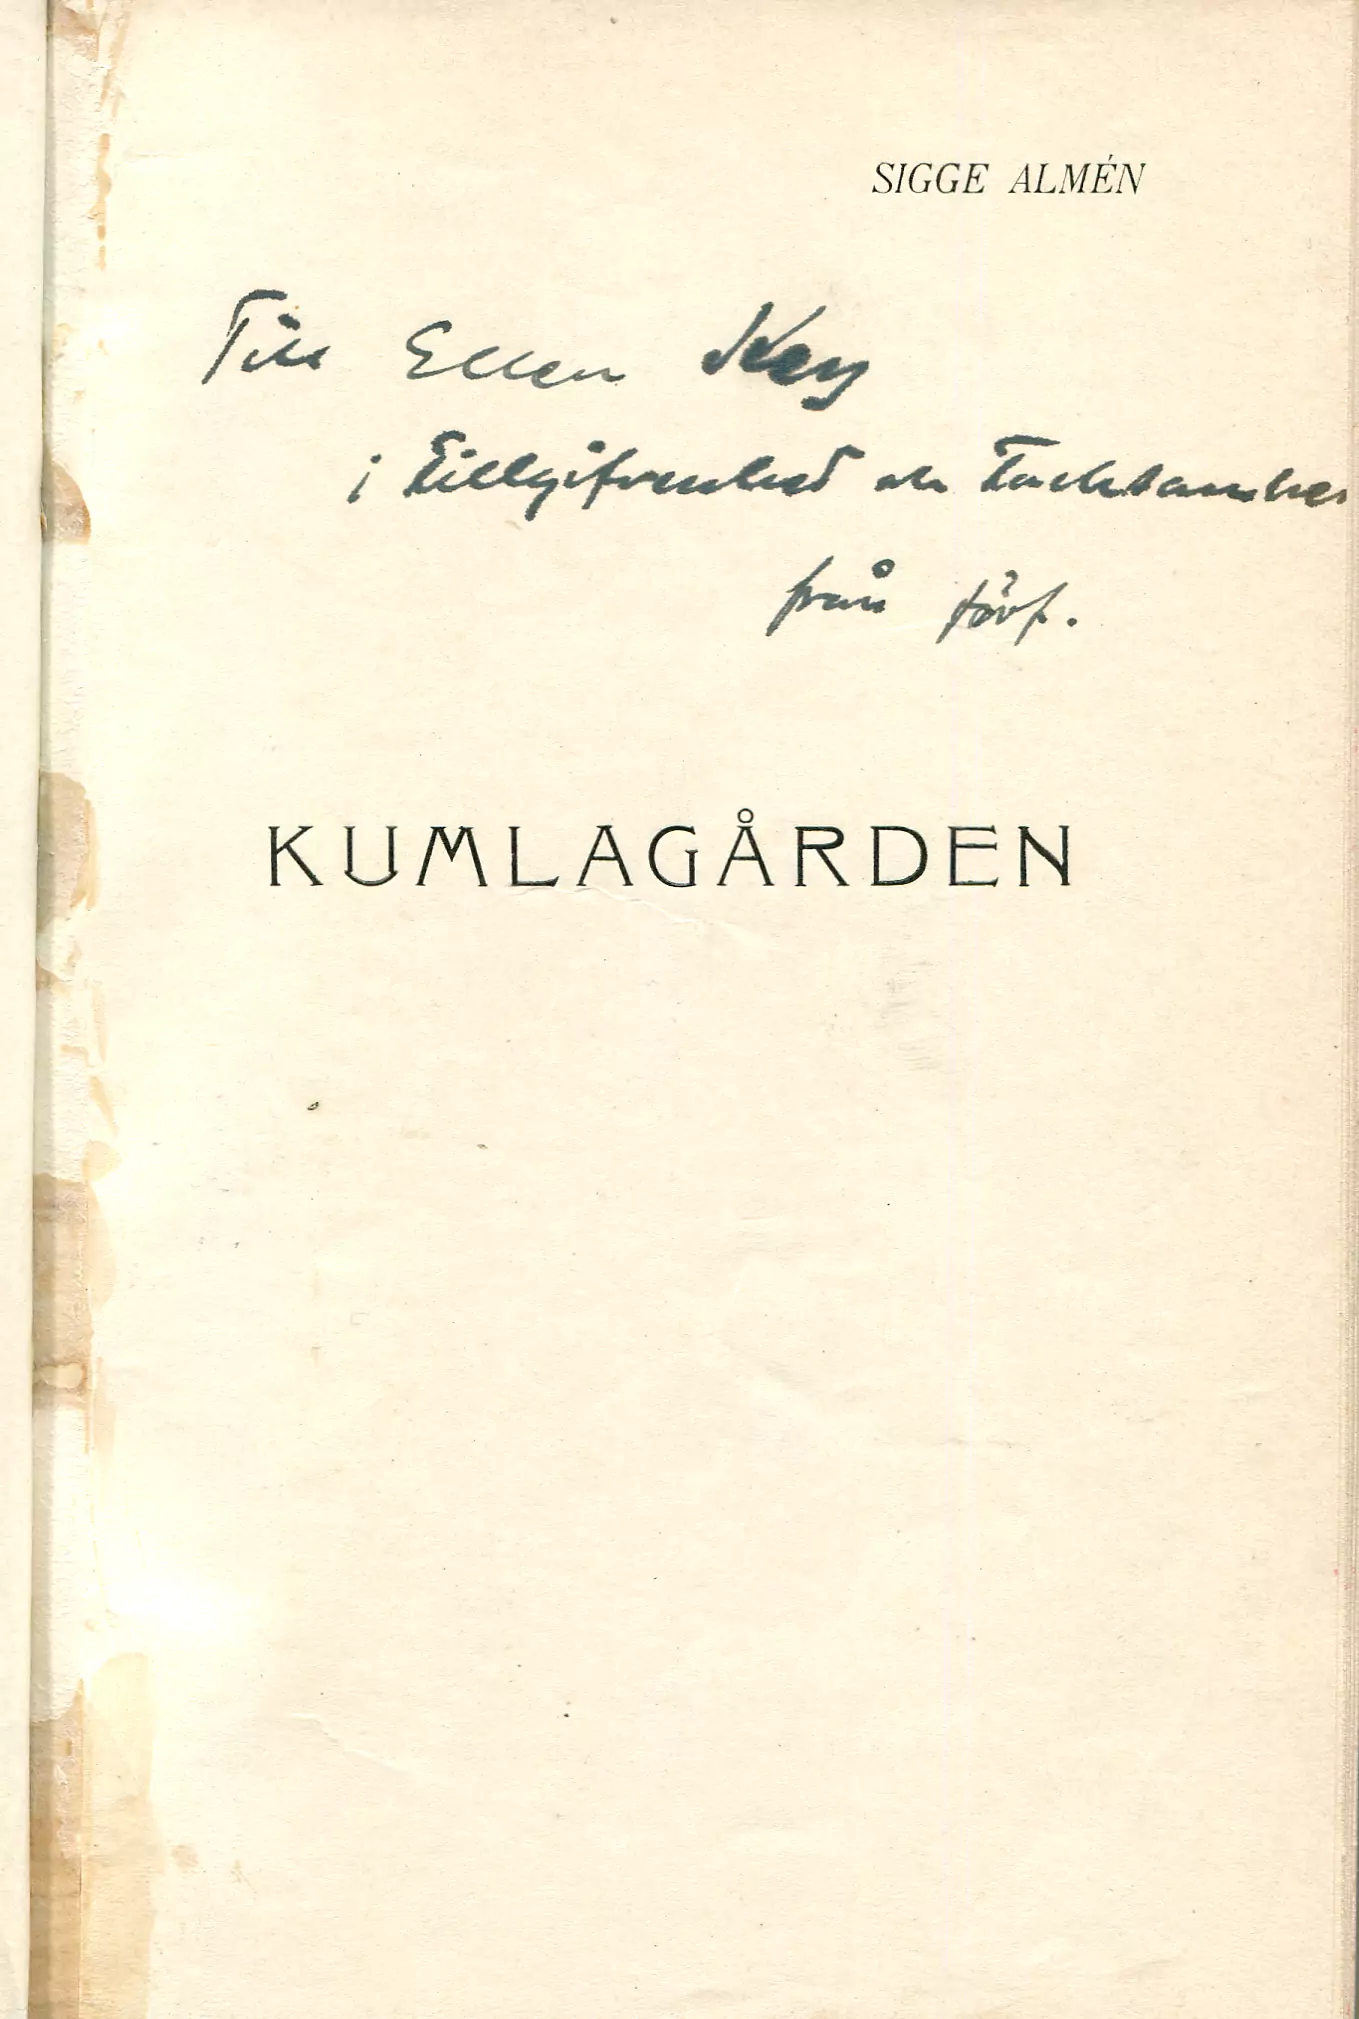 Kumlagården , Stockholm 1906